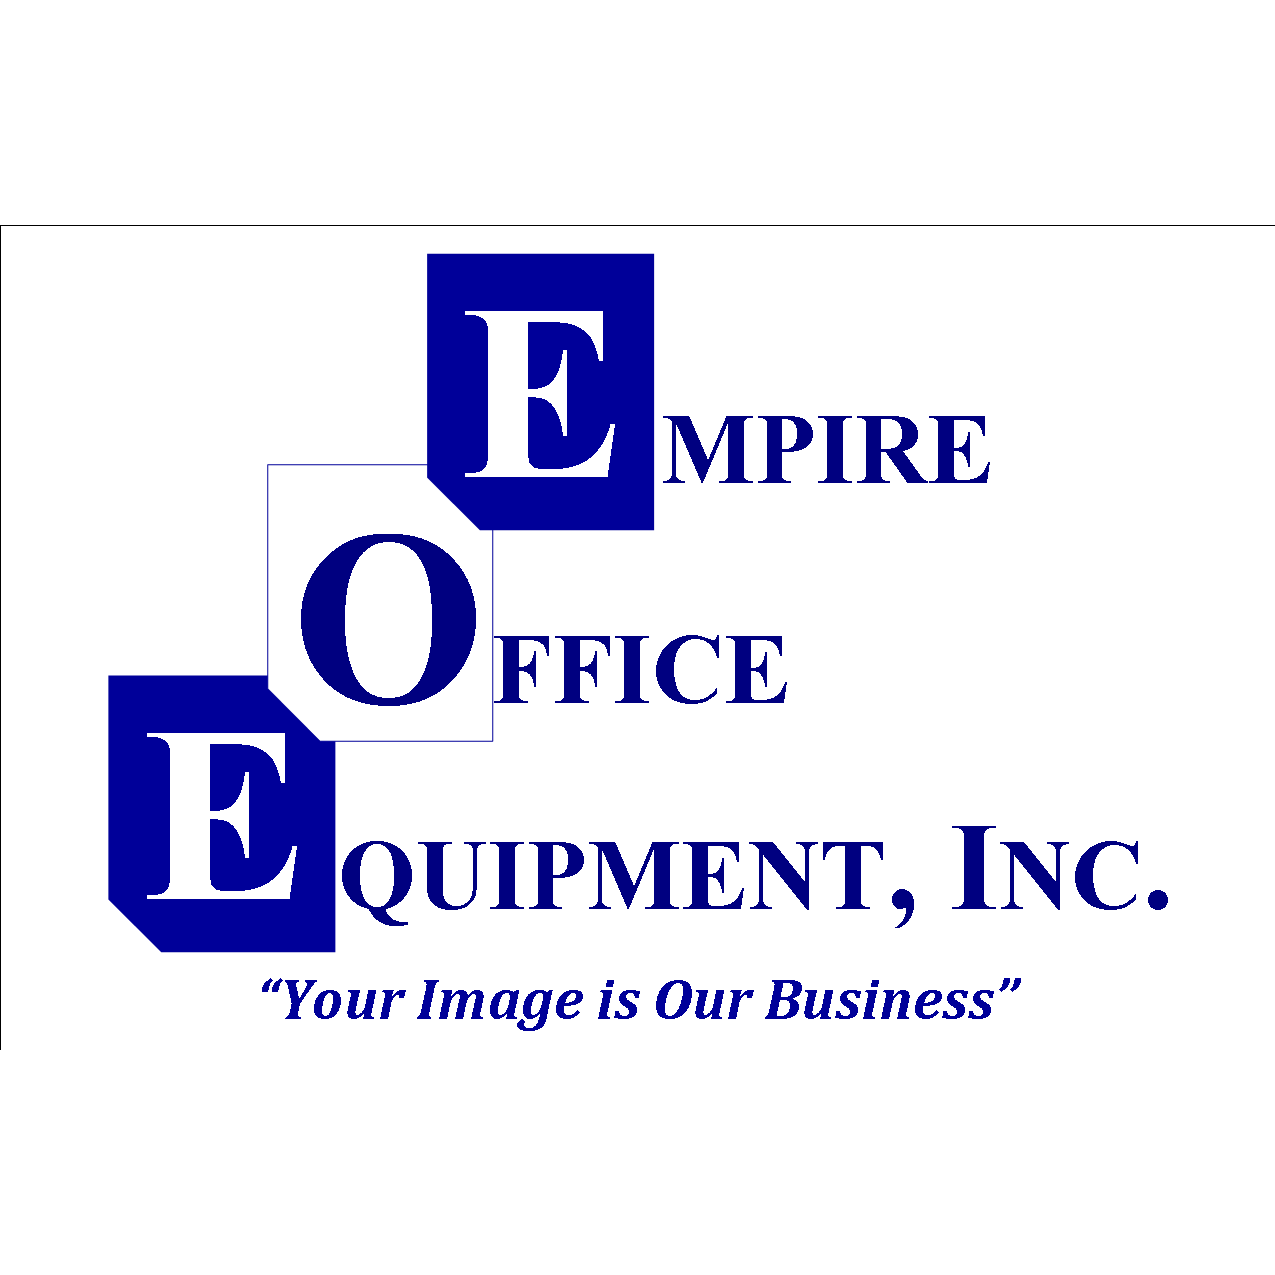 Empire Office Equipment Inc Photo